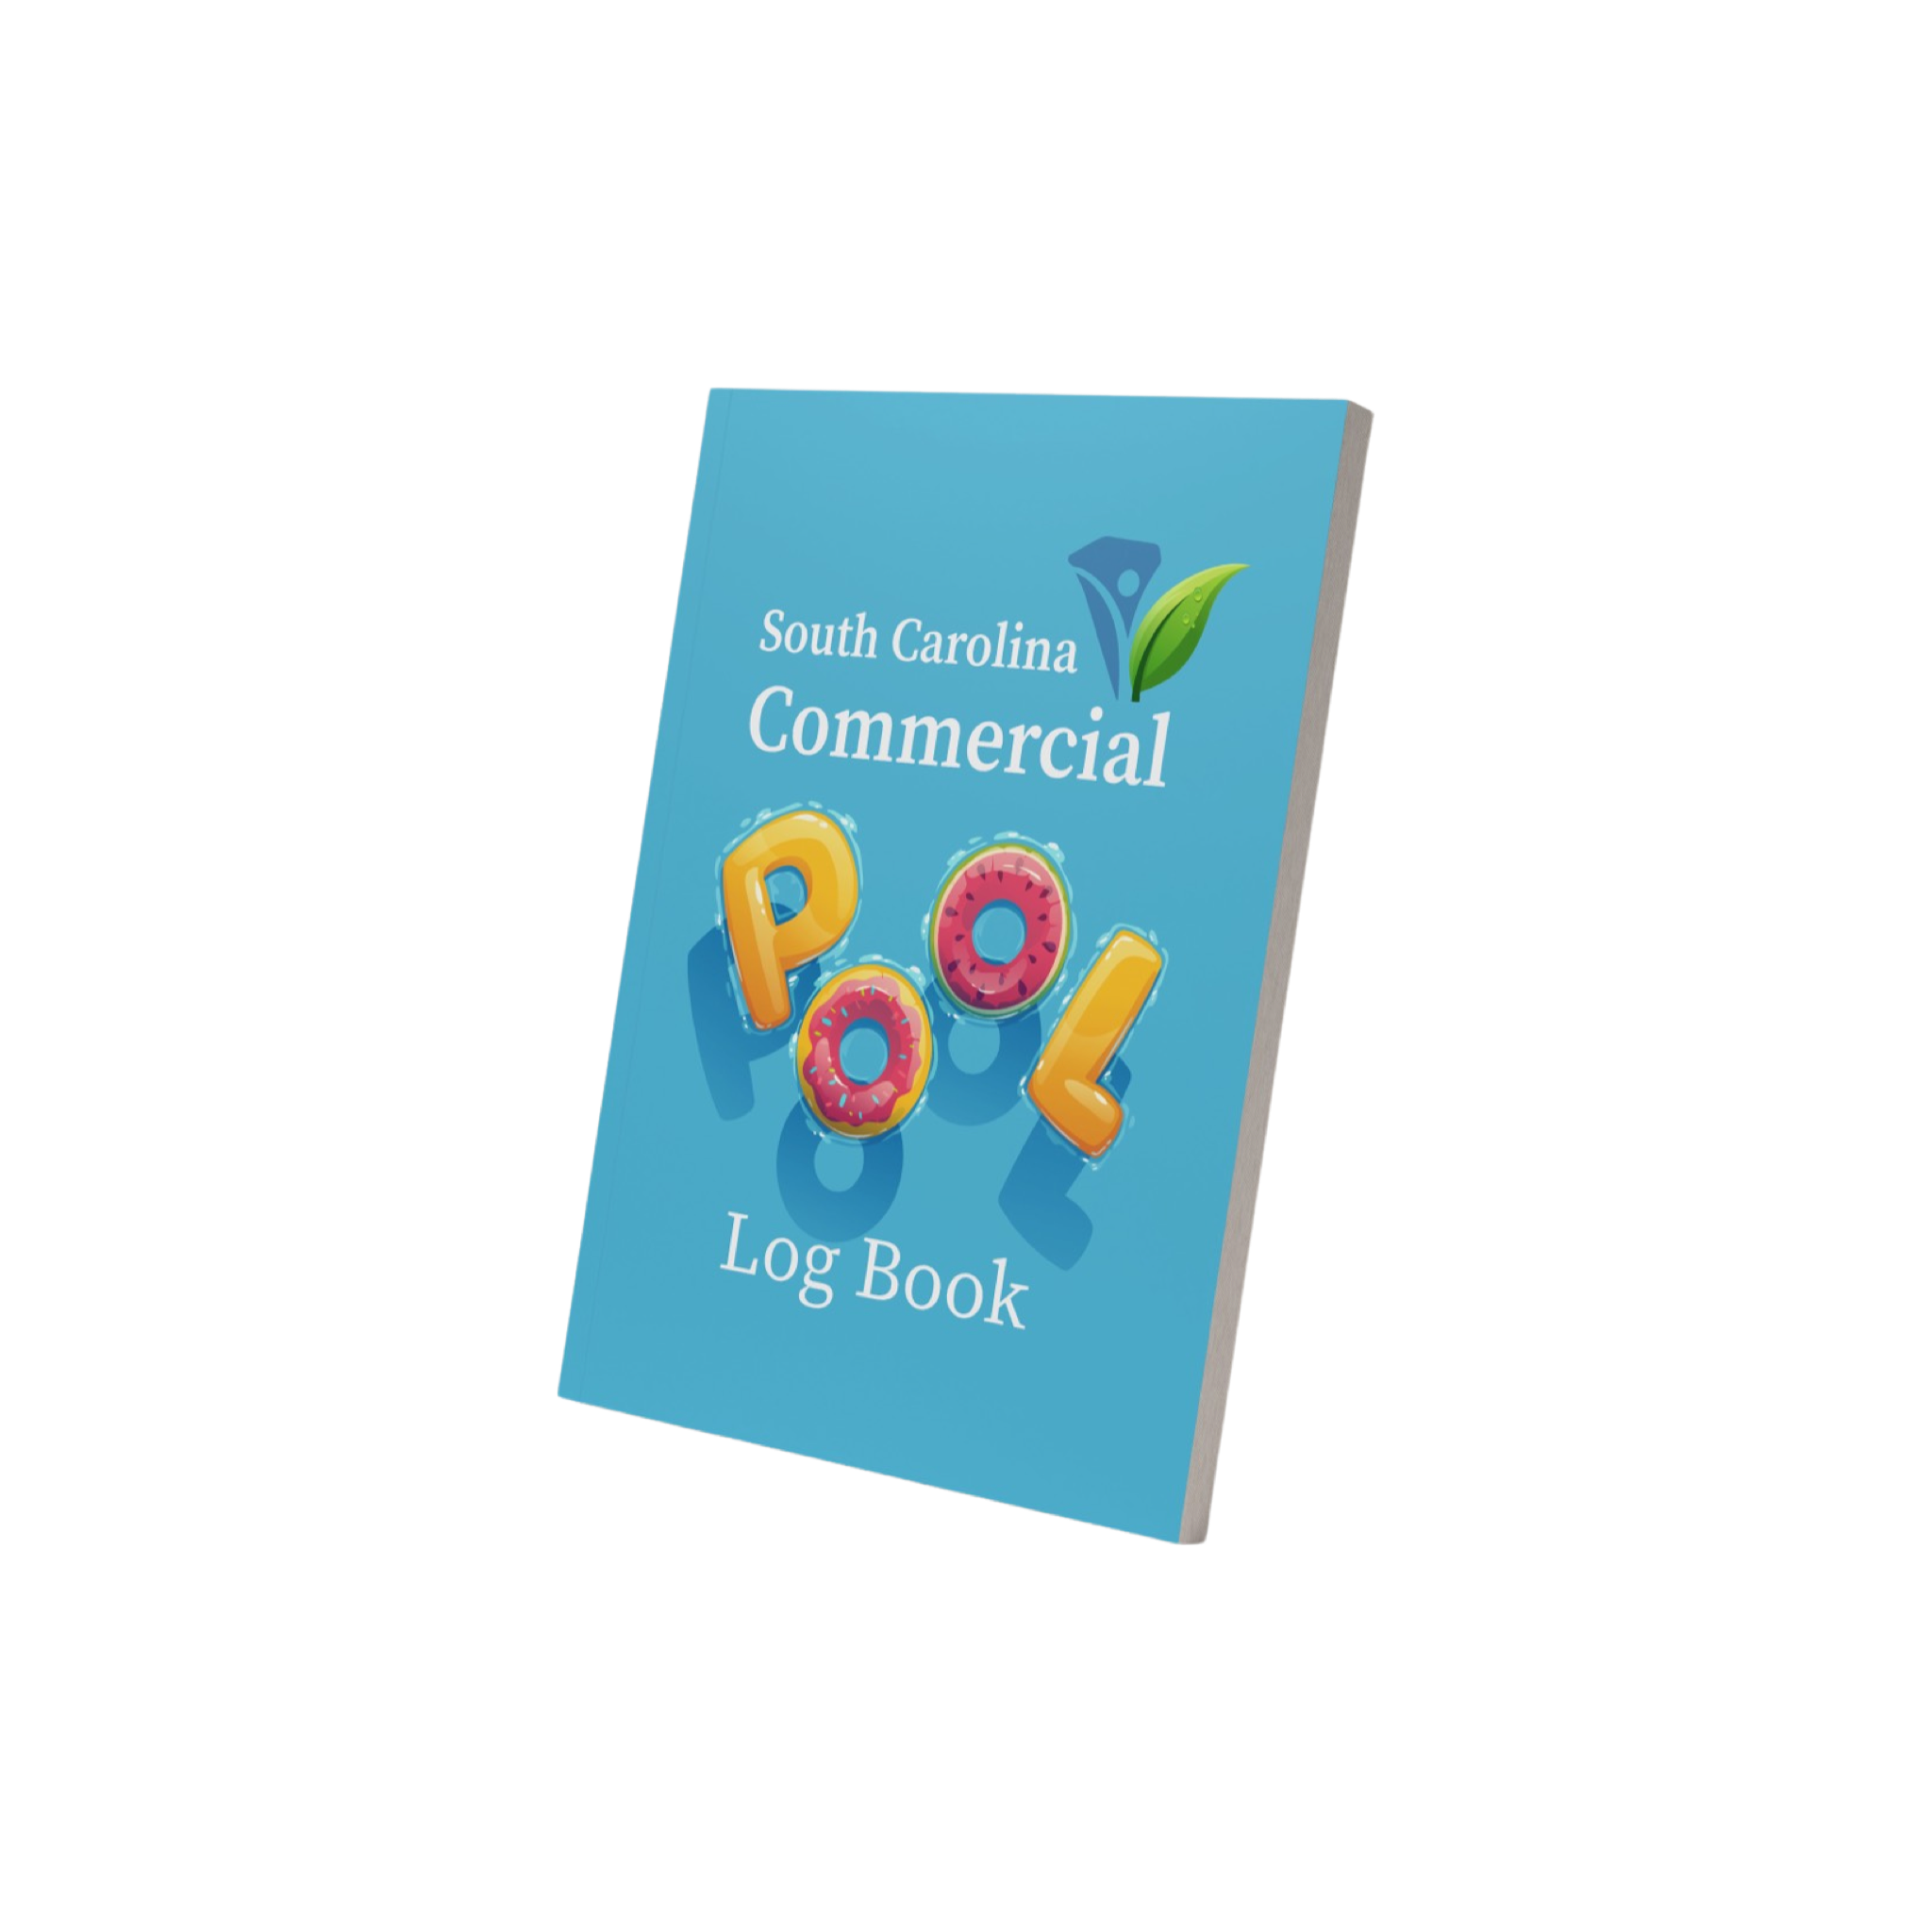 South Carolina Commercial Pool Log Book - Paperback